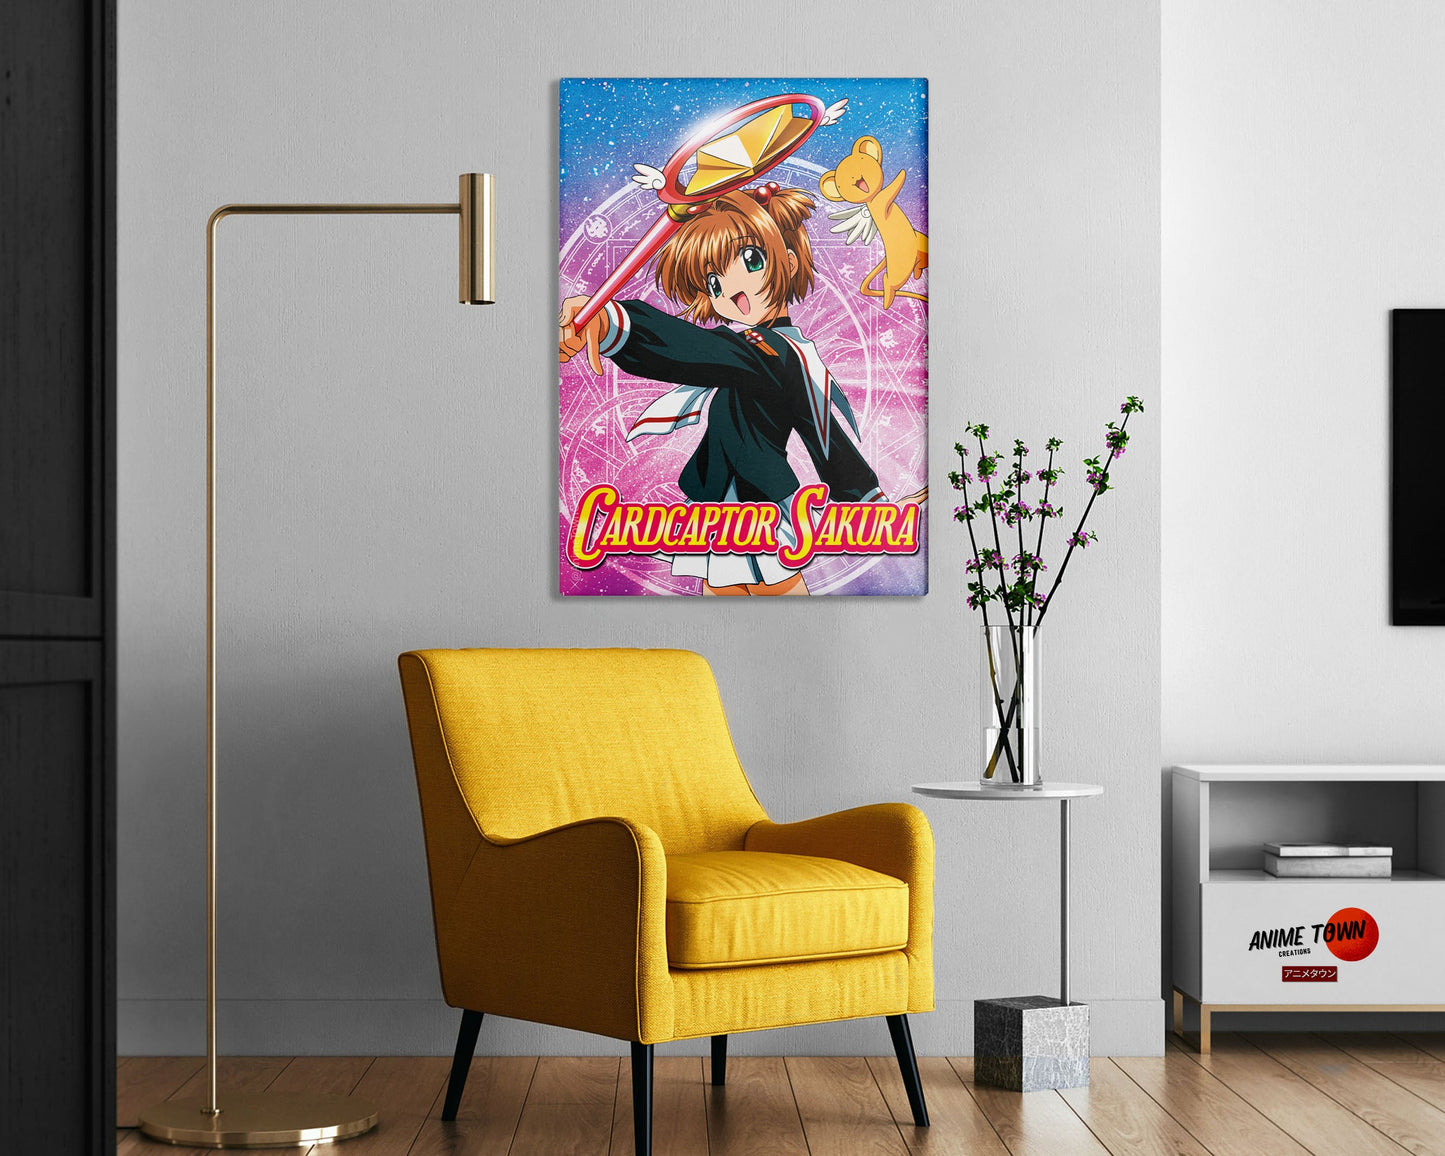 Anime Town Creations Metal Poster Cardcaptor Sakura 16" x 24" Home Goods - Anime Cardcaptor Sakura Metal Poster